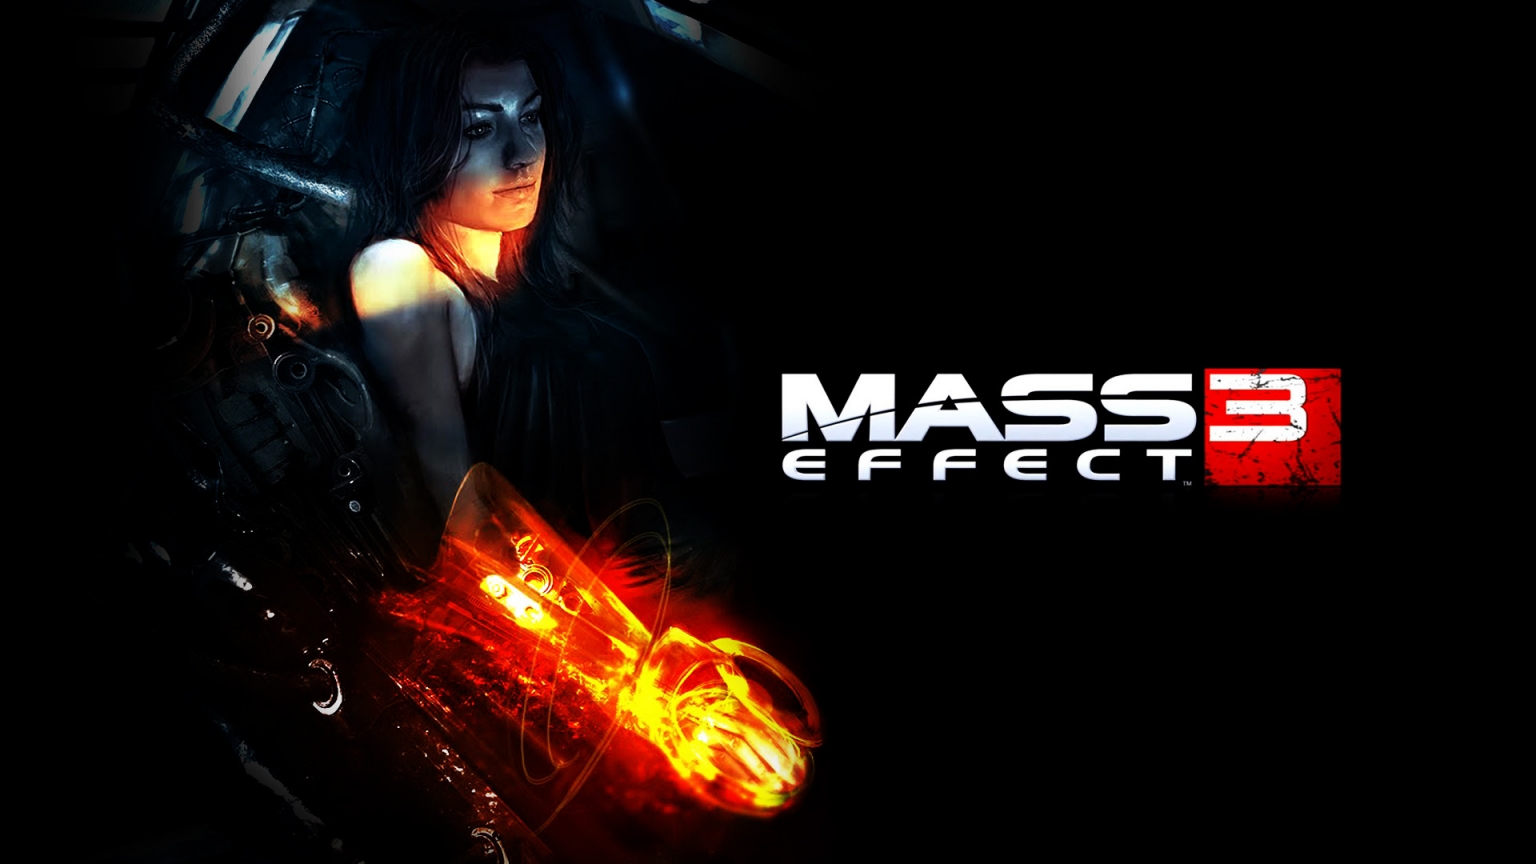 Miranda Mass Effect 3 for 1536 x 864 HDTV resolution